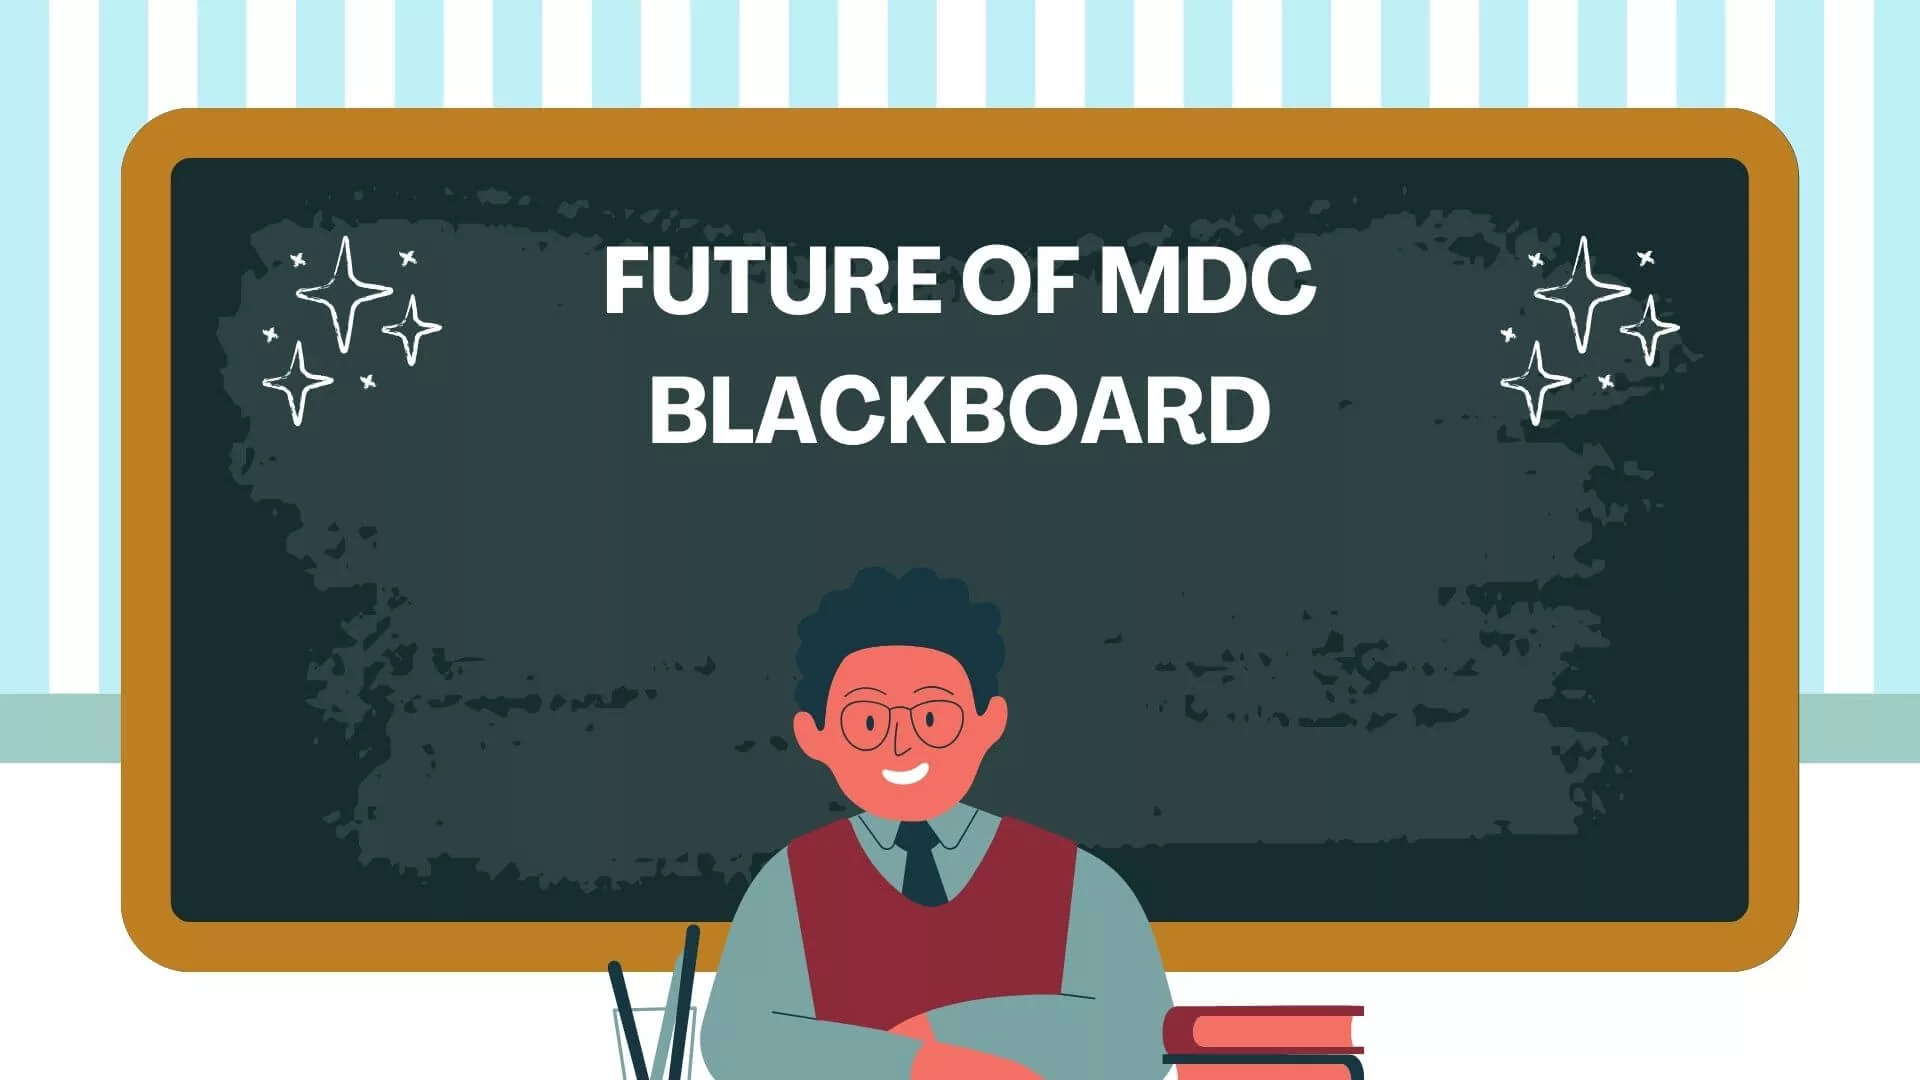 The Future of MDC Blackboard